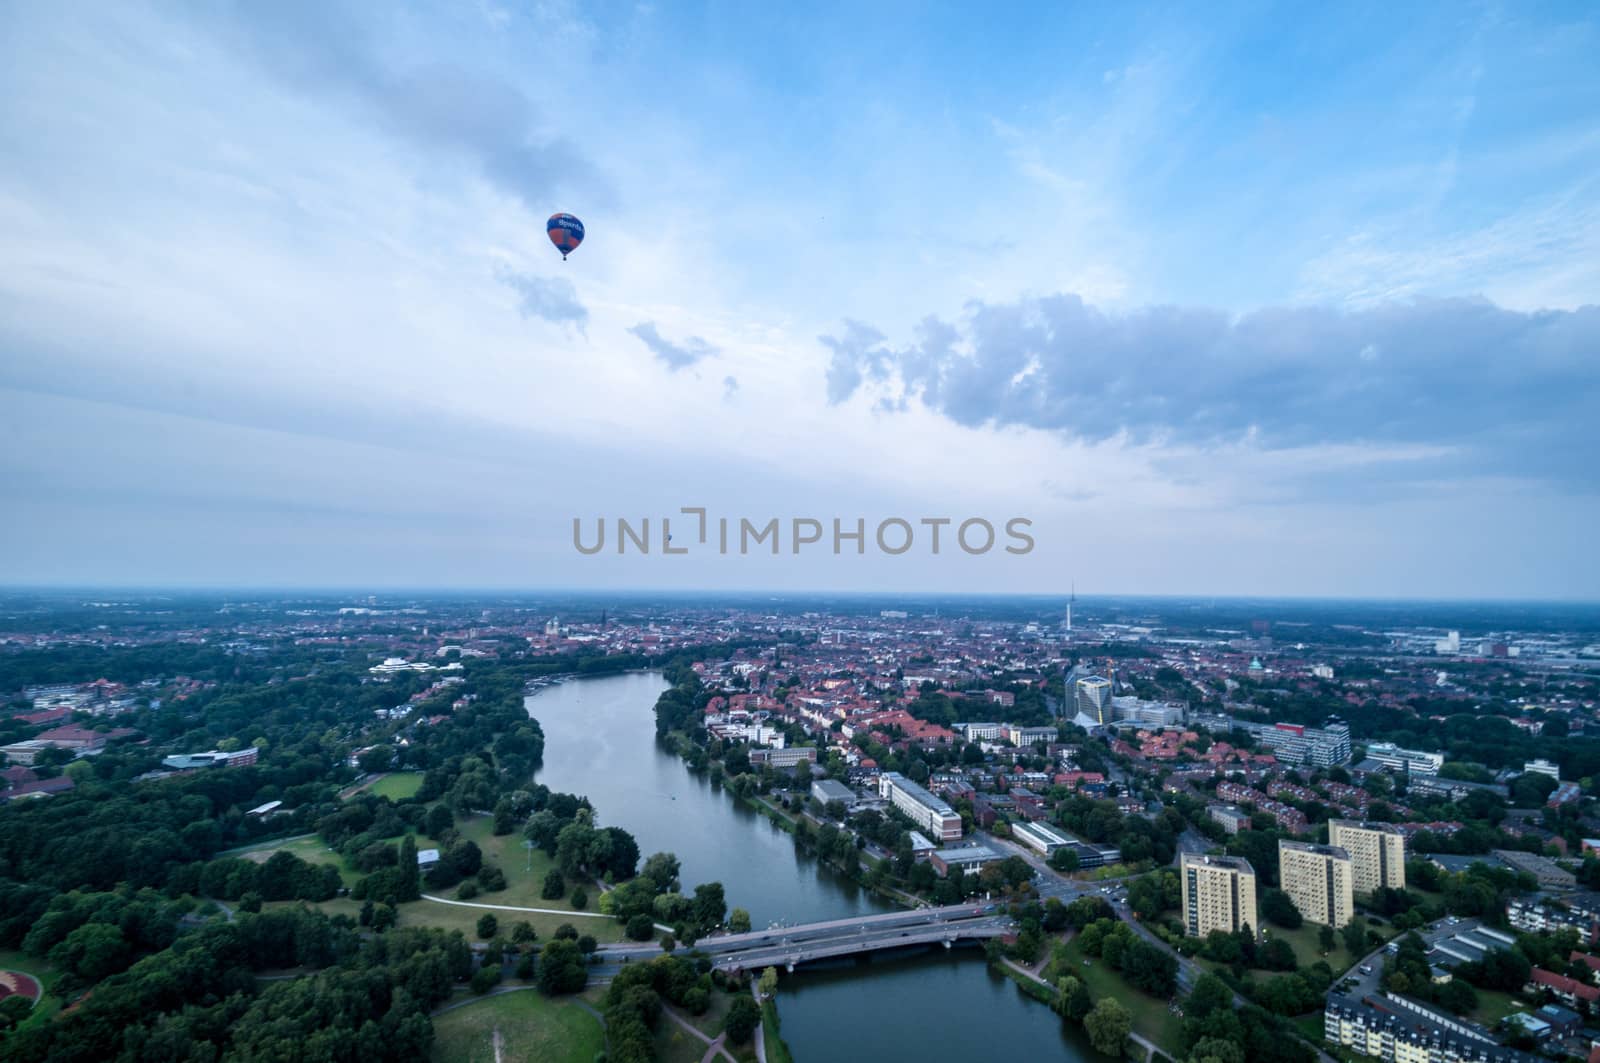 Hot air balloons over Muenster by Jule_Berlin